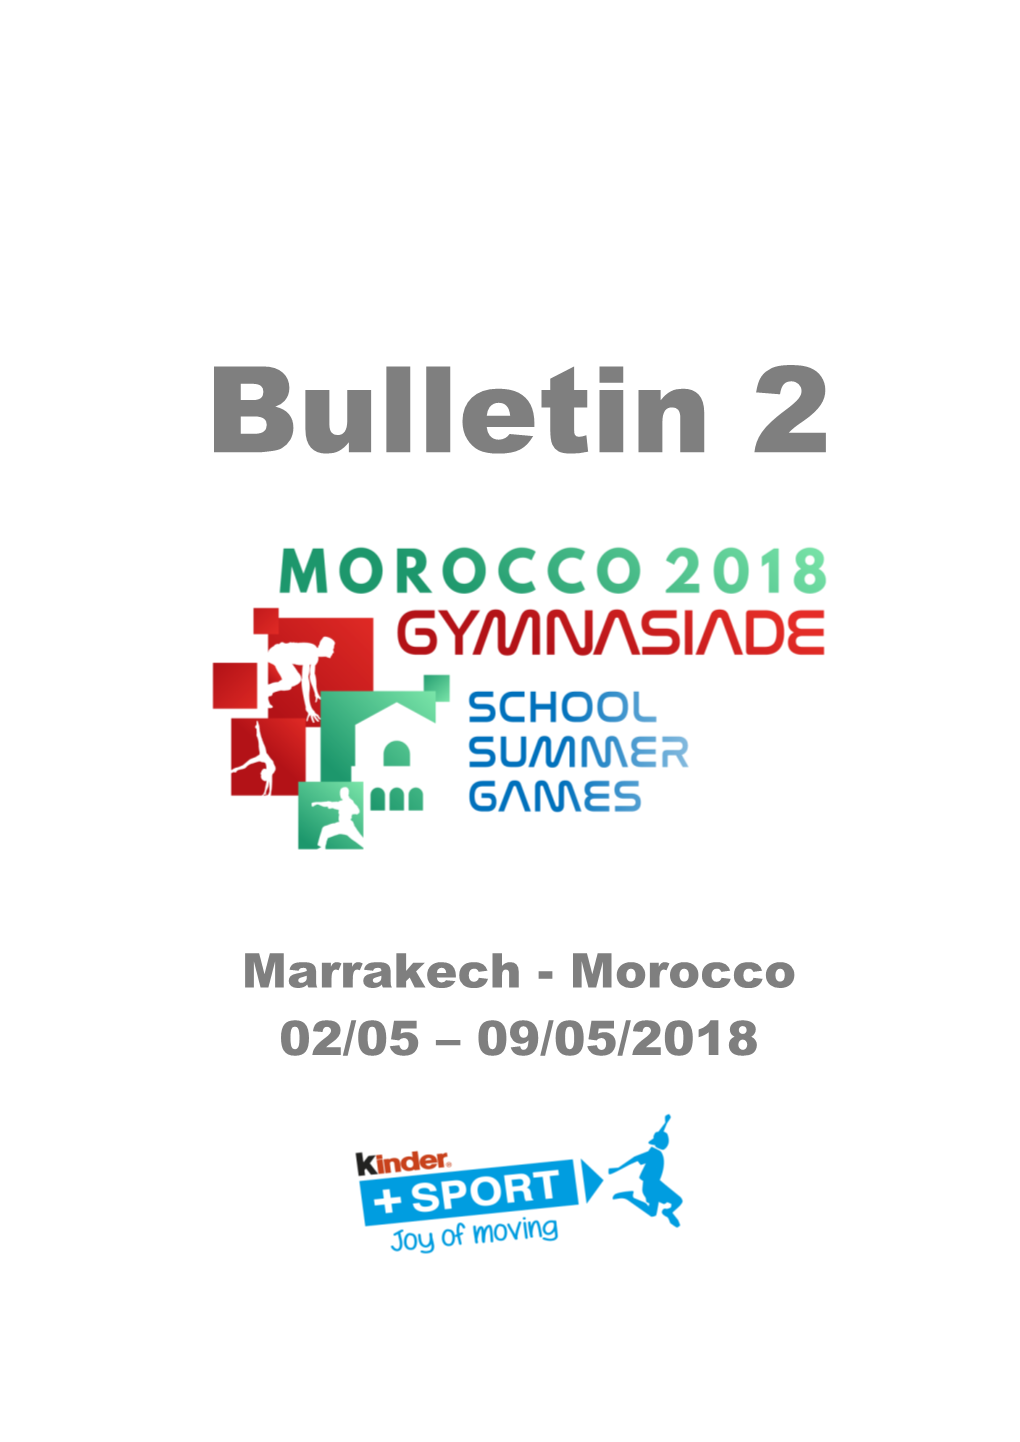 Marrakech - Morocco 02/05 – 09/05/2018 ORGANISATION